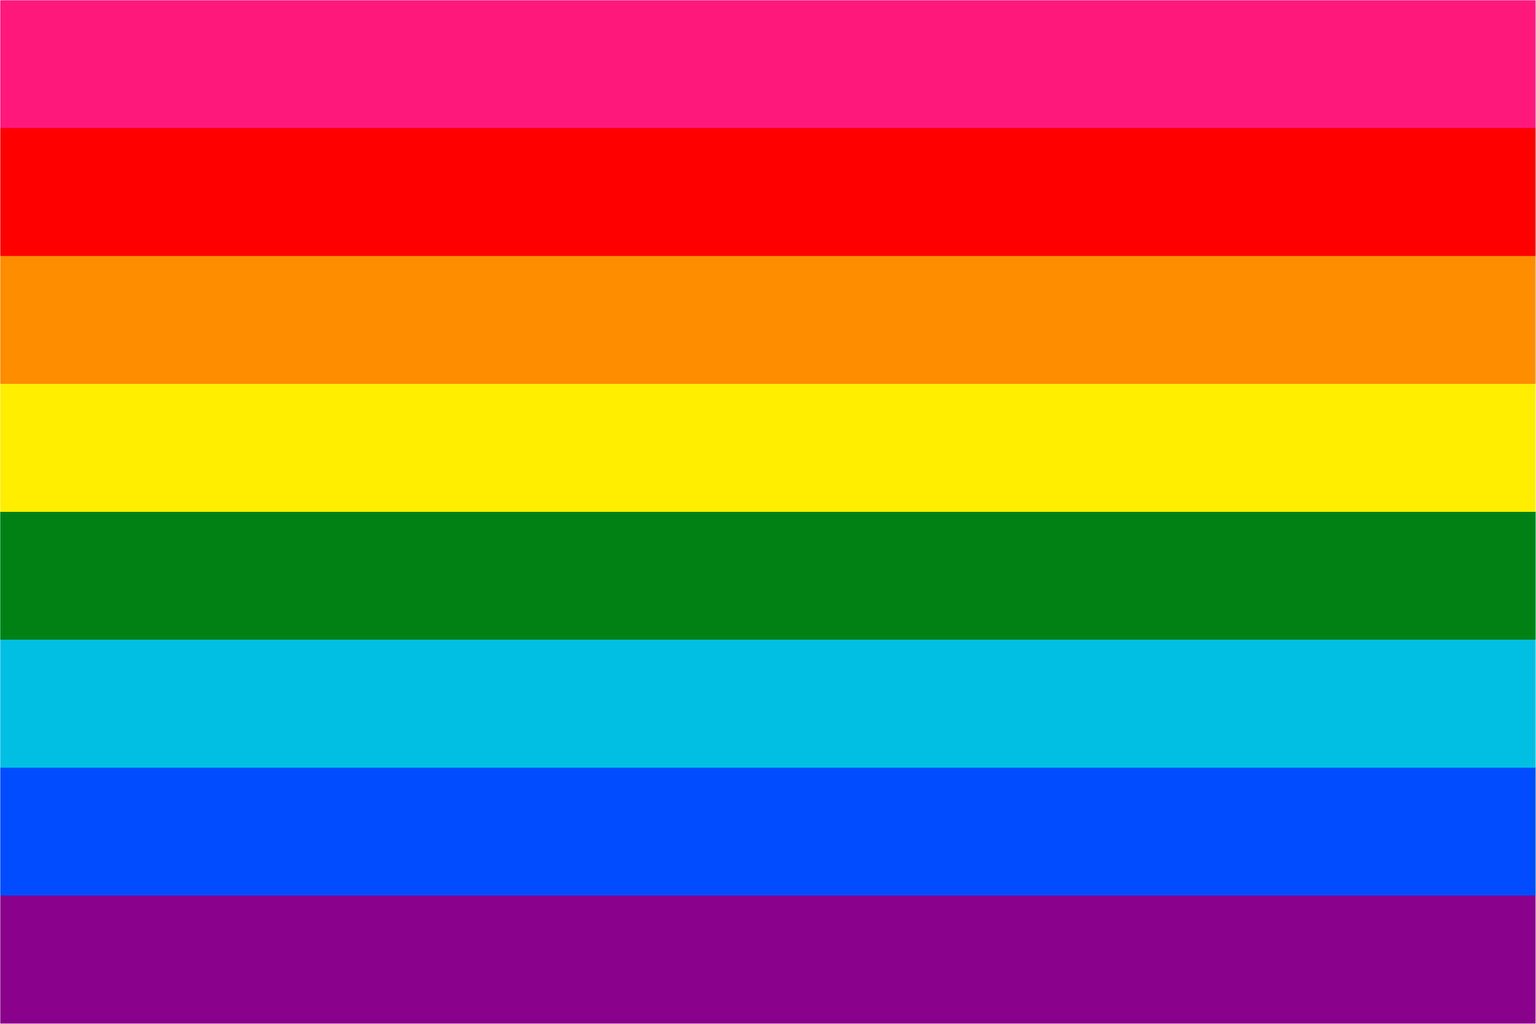 Free Printable Pride Flags Printable Blank World